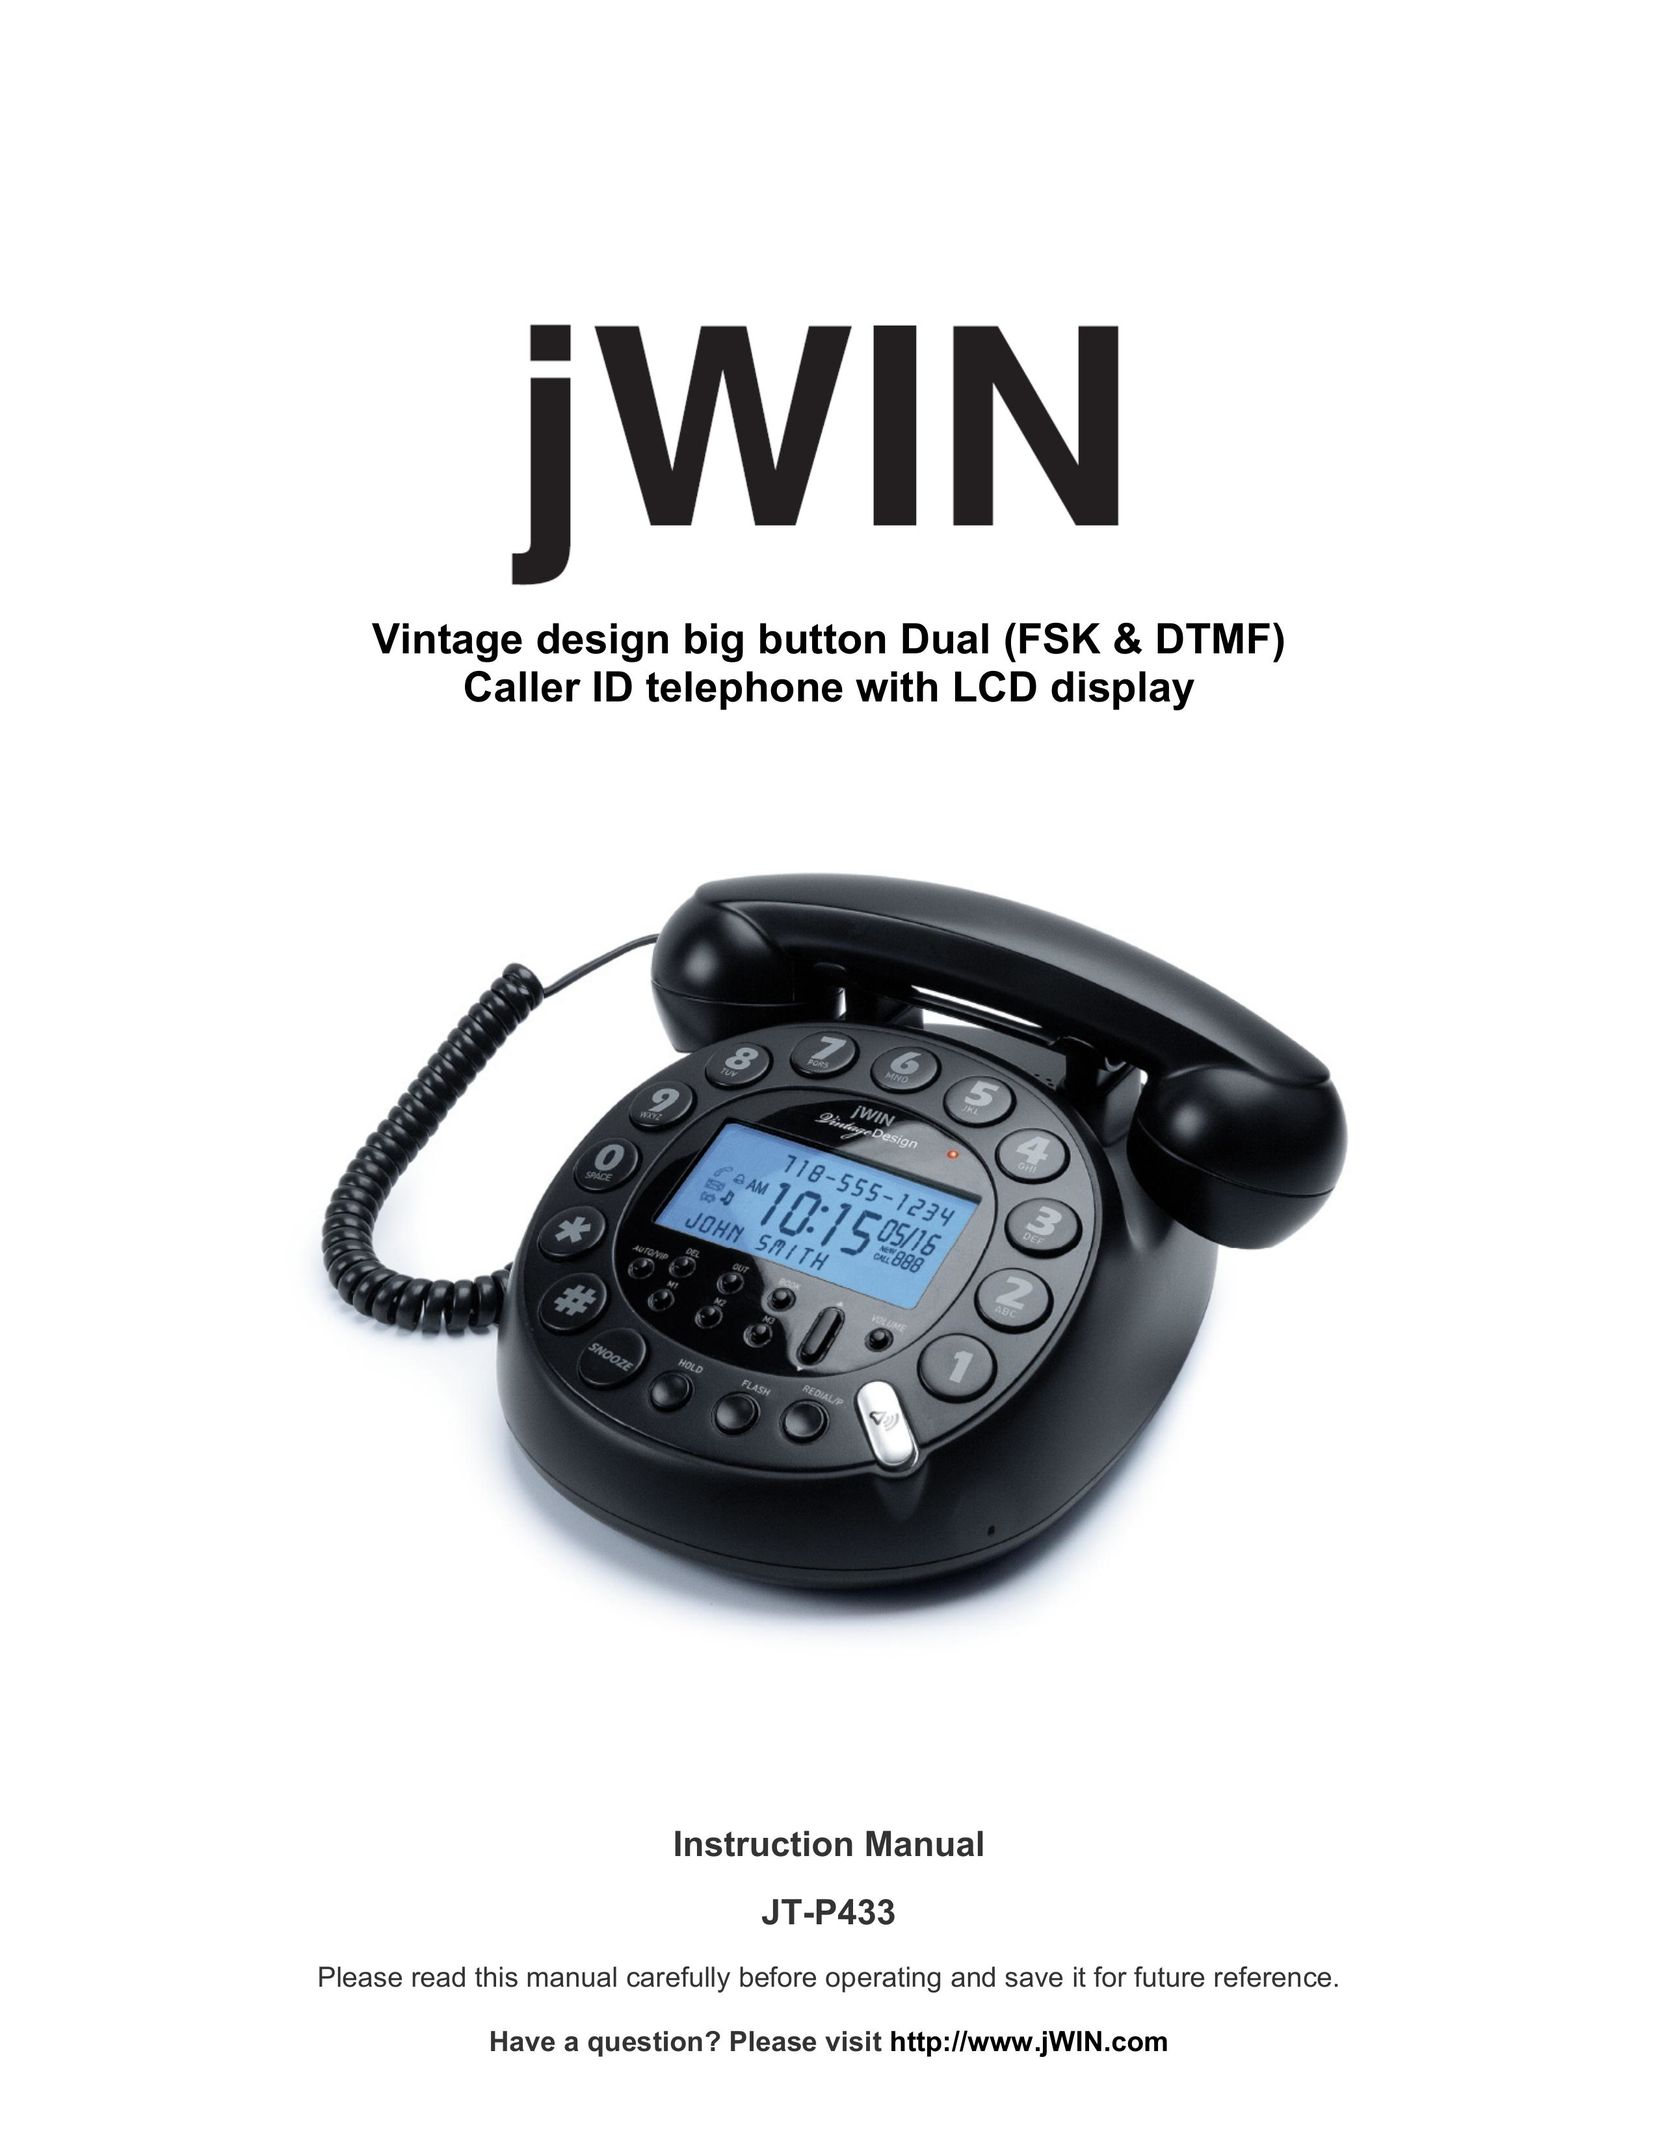 Jwin JT-P433 Telephone User Manual